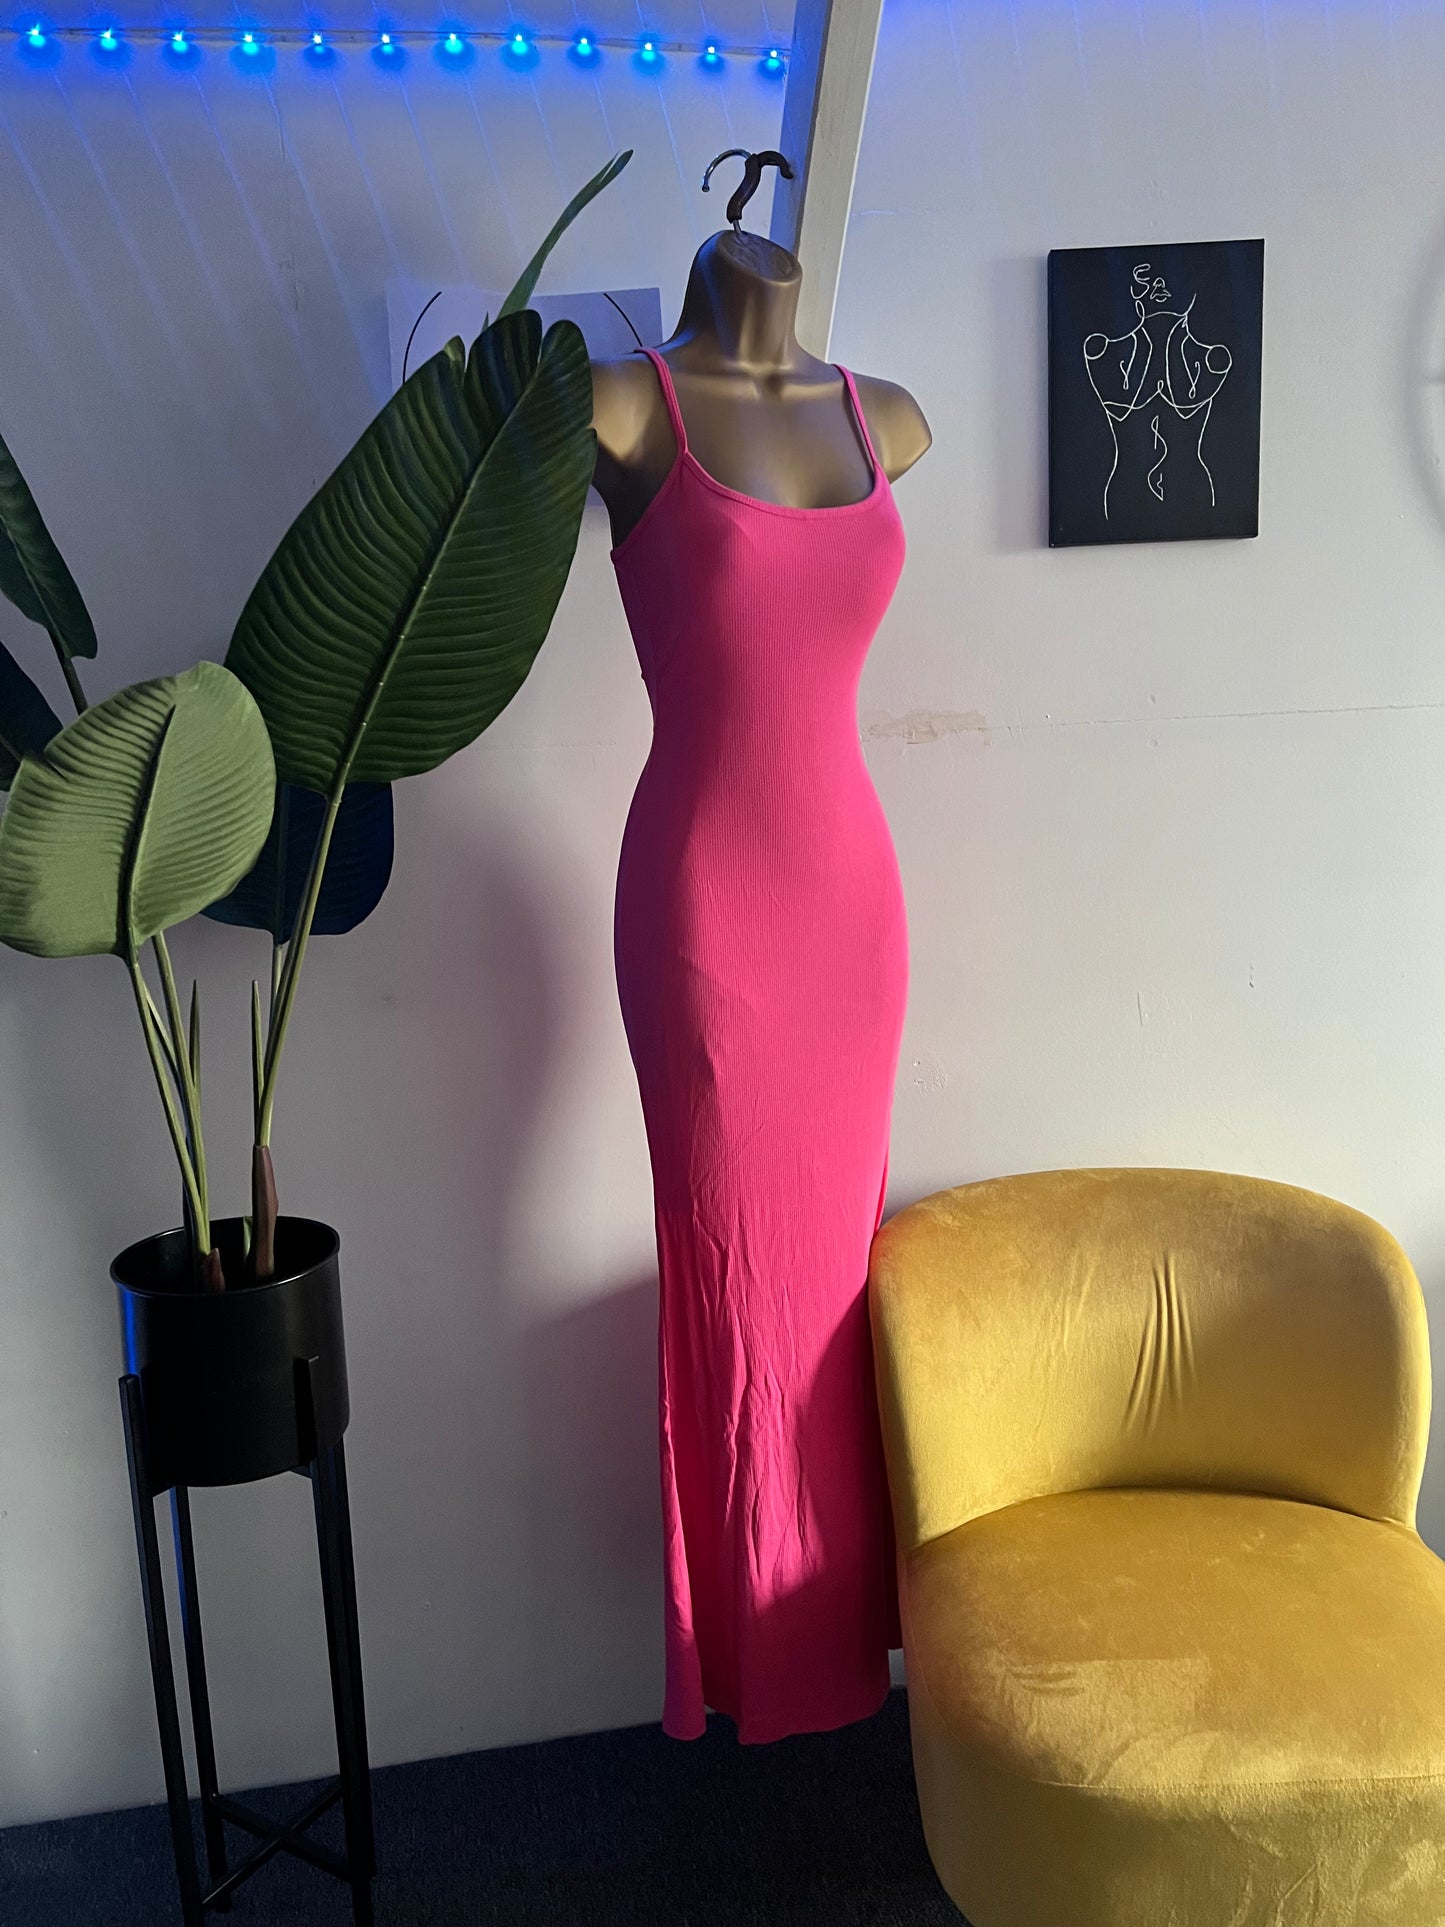 SkxN Luxe Built-in Shapewear Dress Shaping Sleeveless Summer Maxi Dress